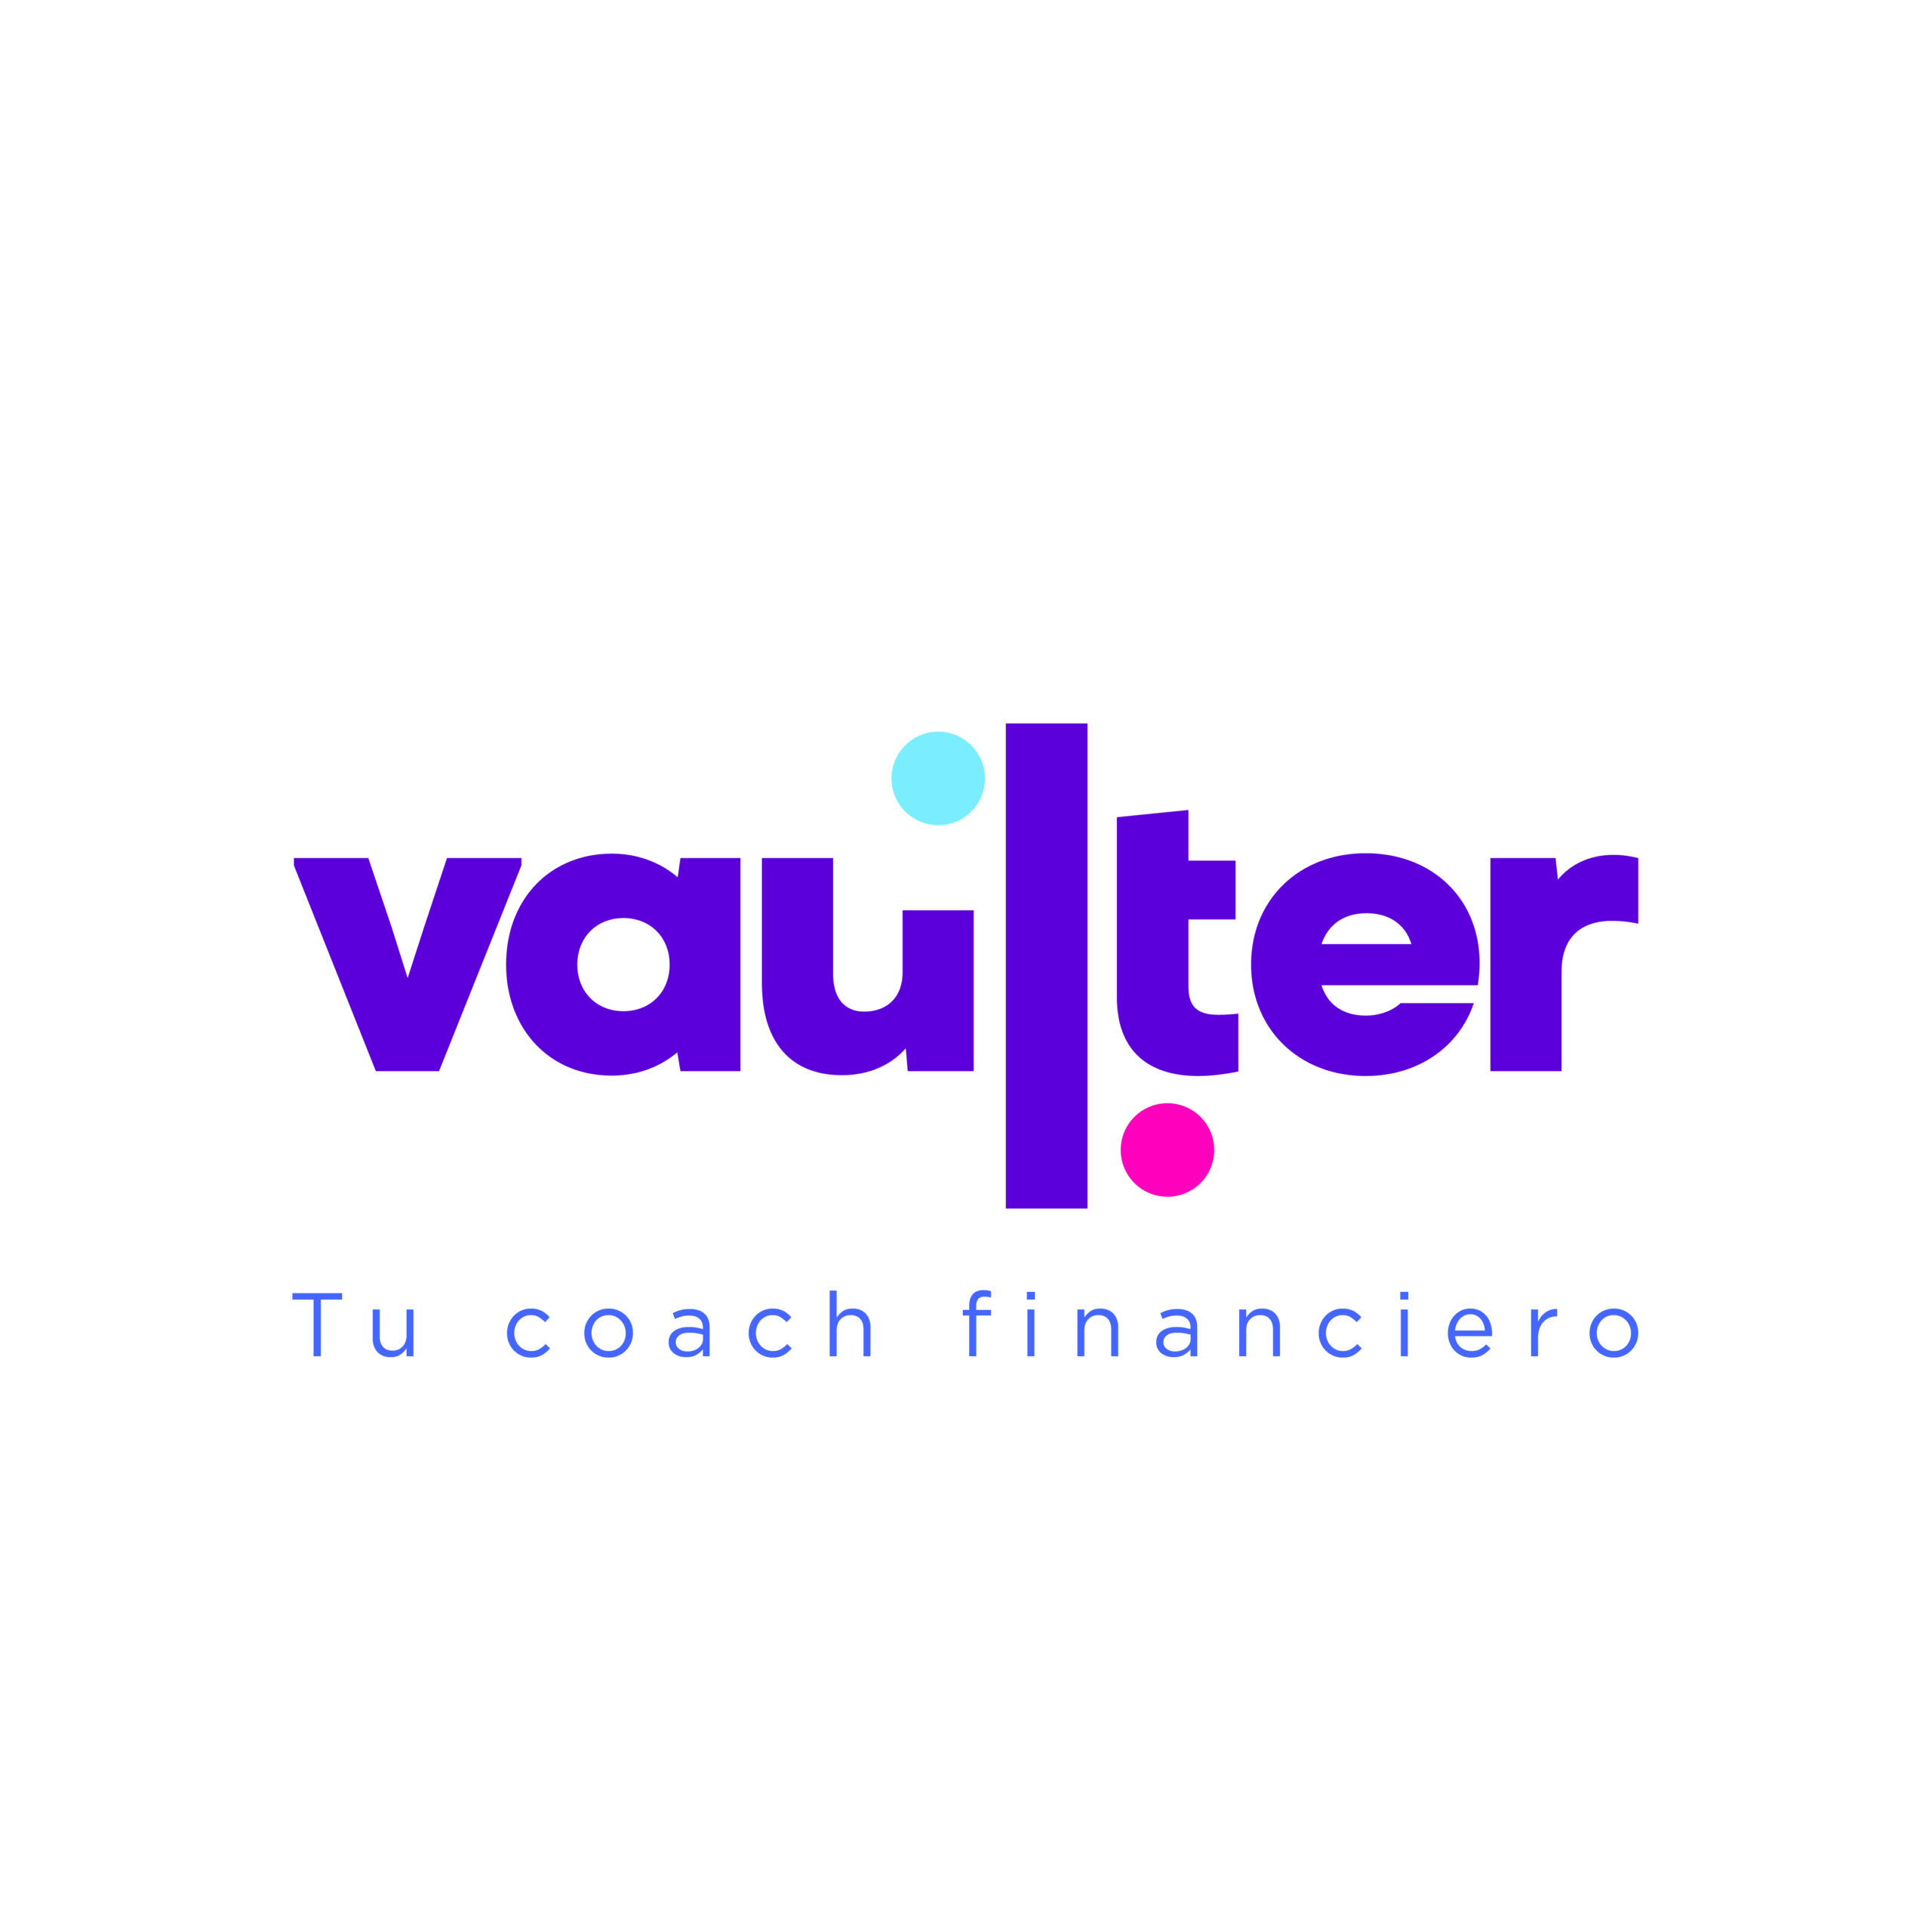 Vaulter Def 02 scaled